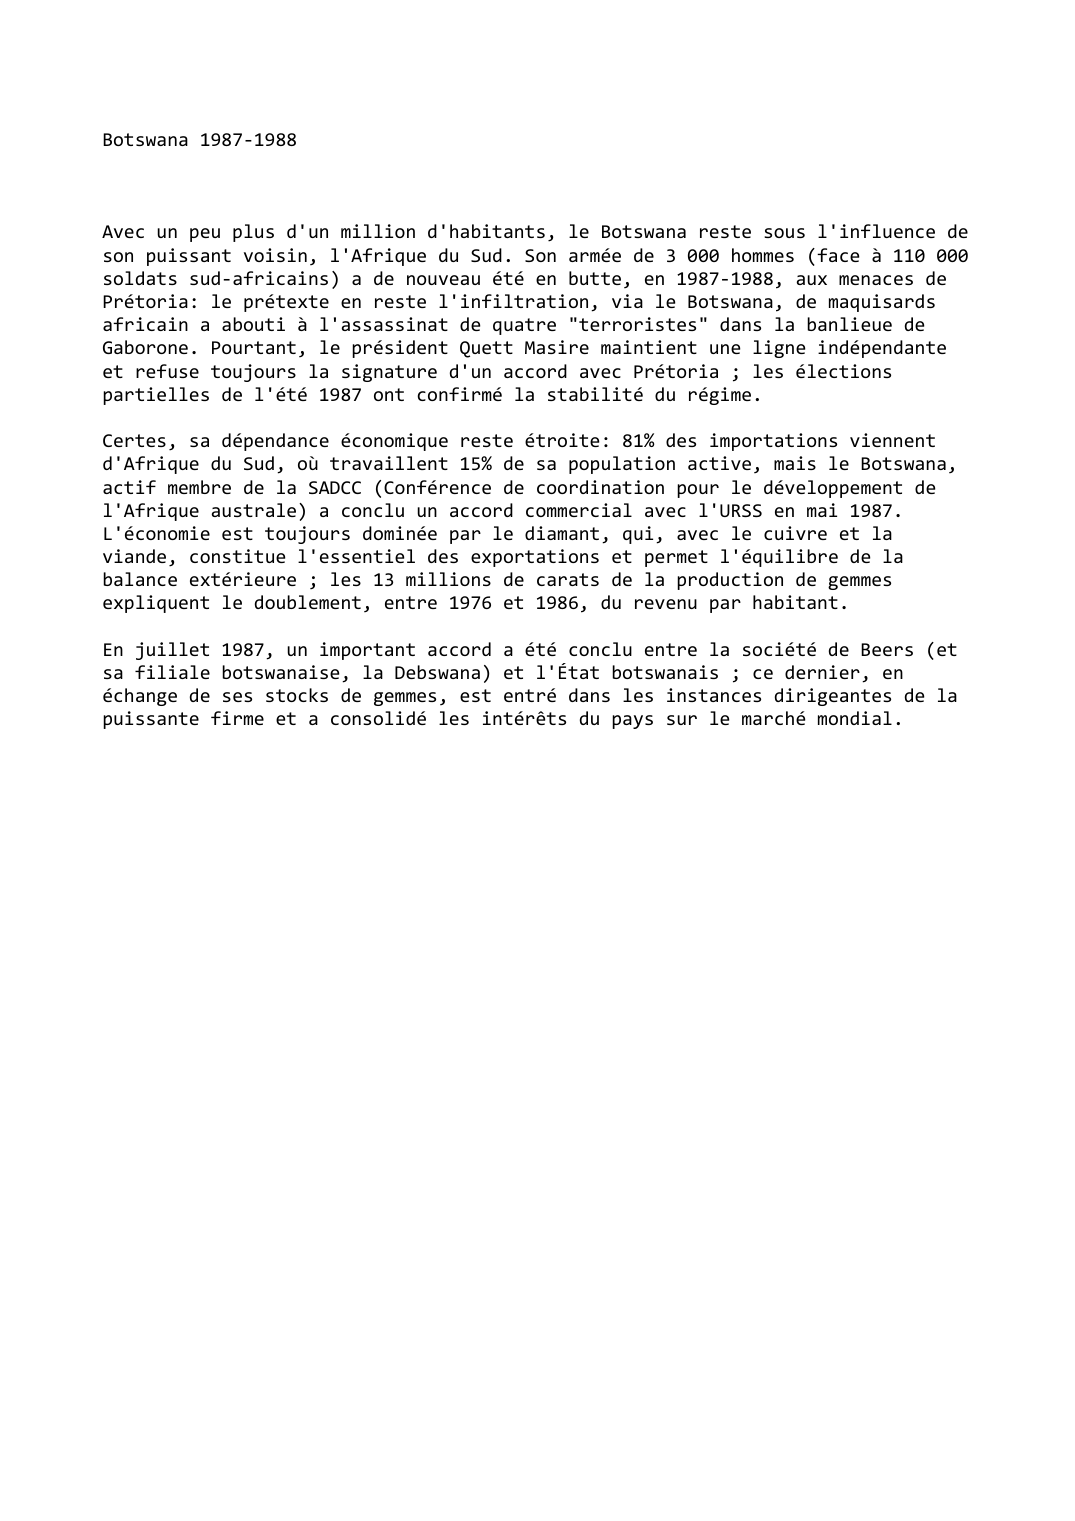 Prévisualisation du document Botswana (1987-1988)